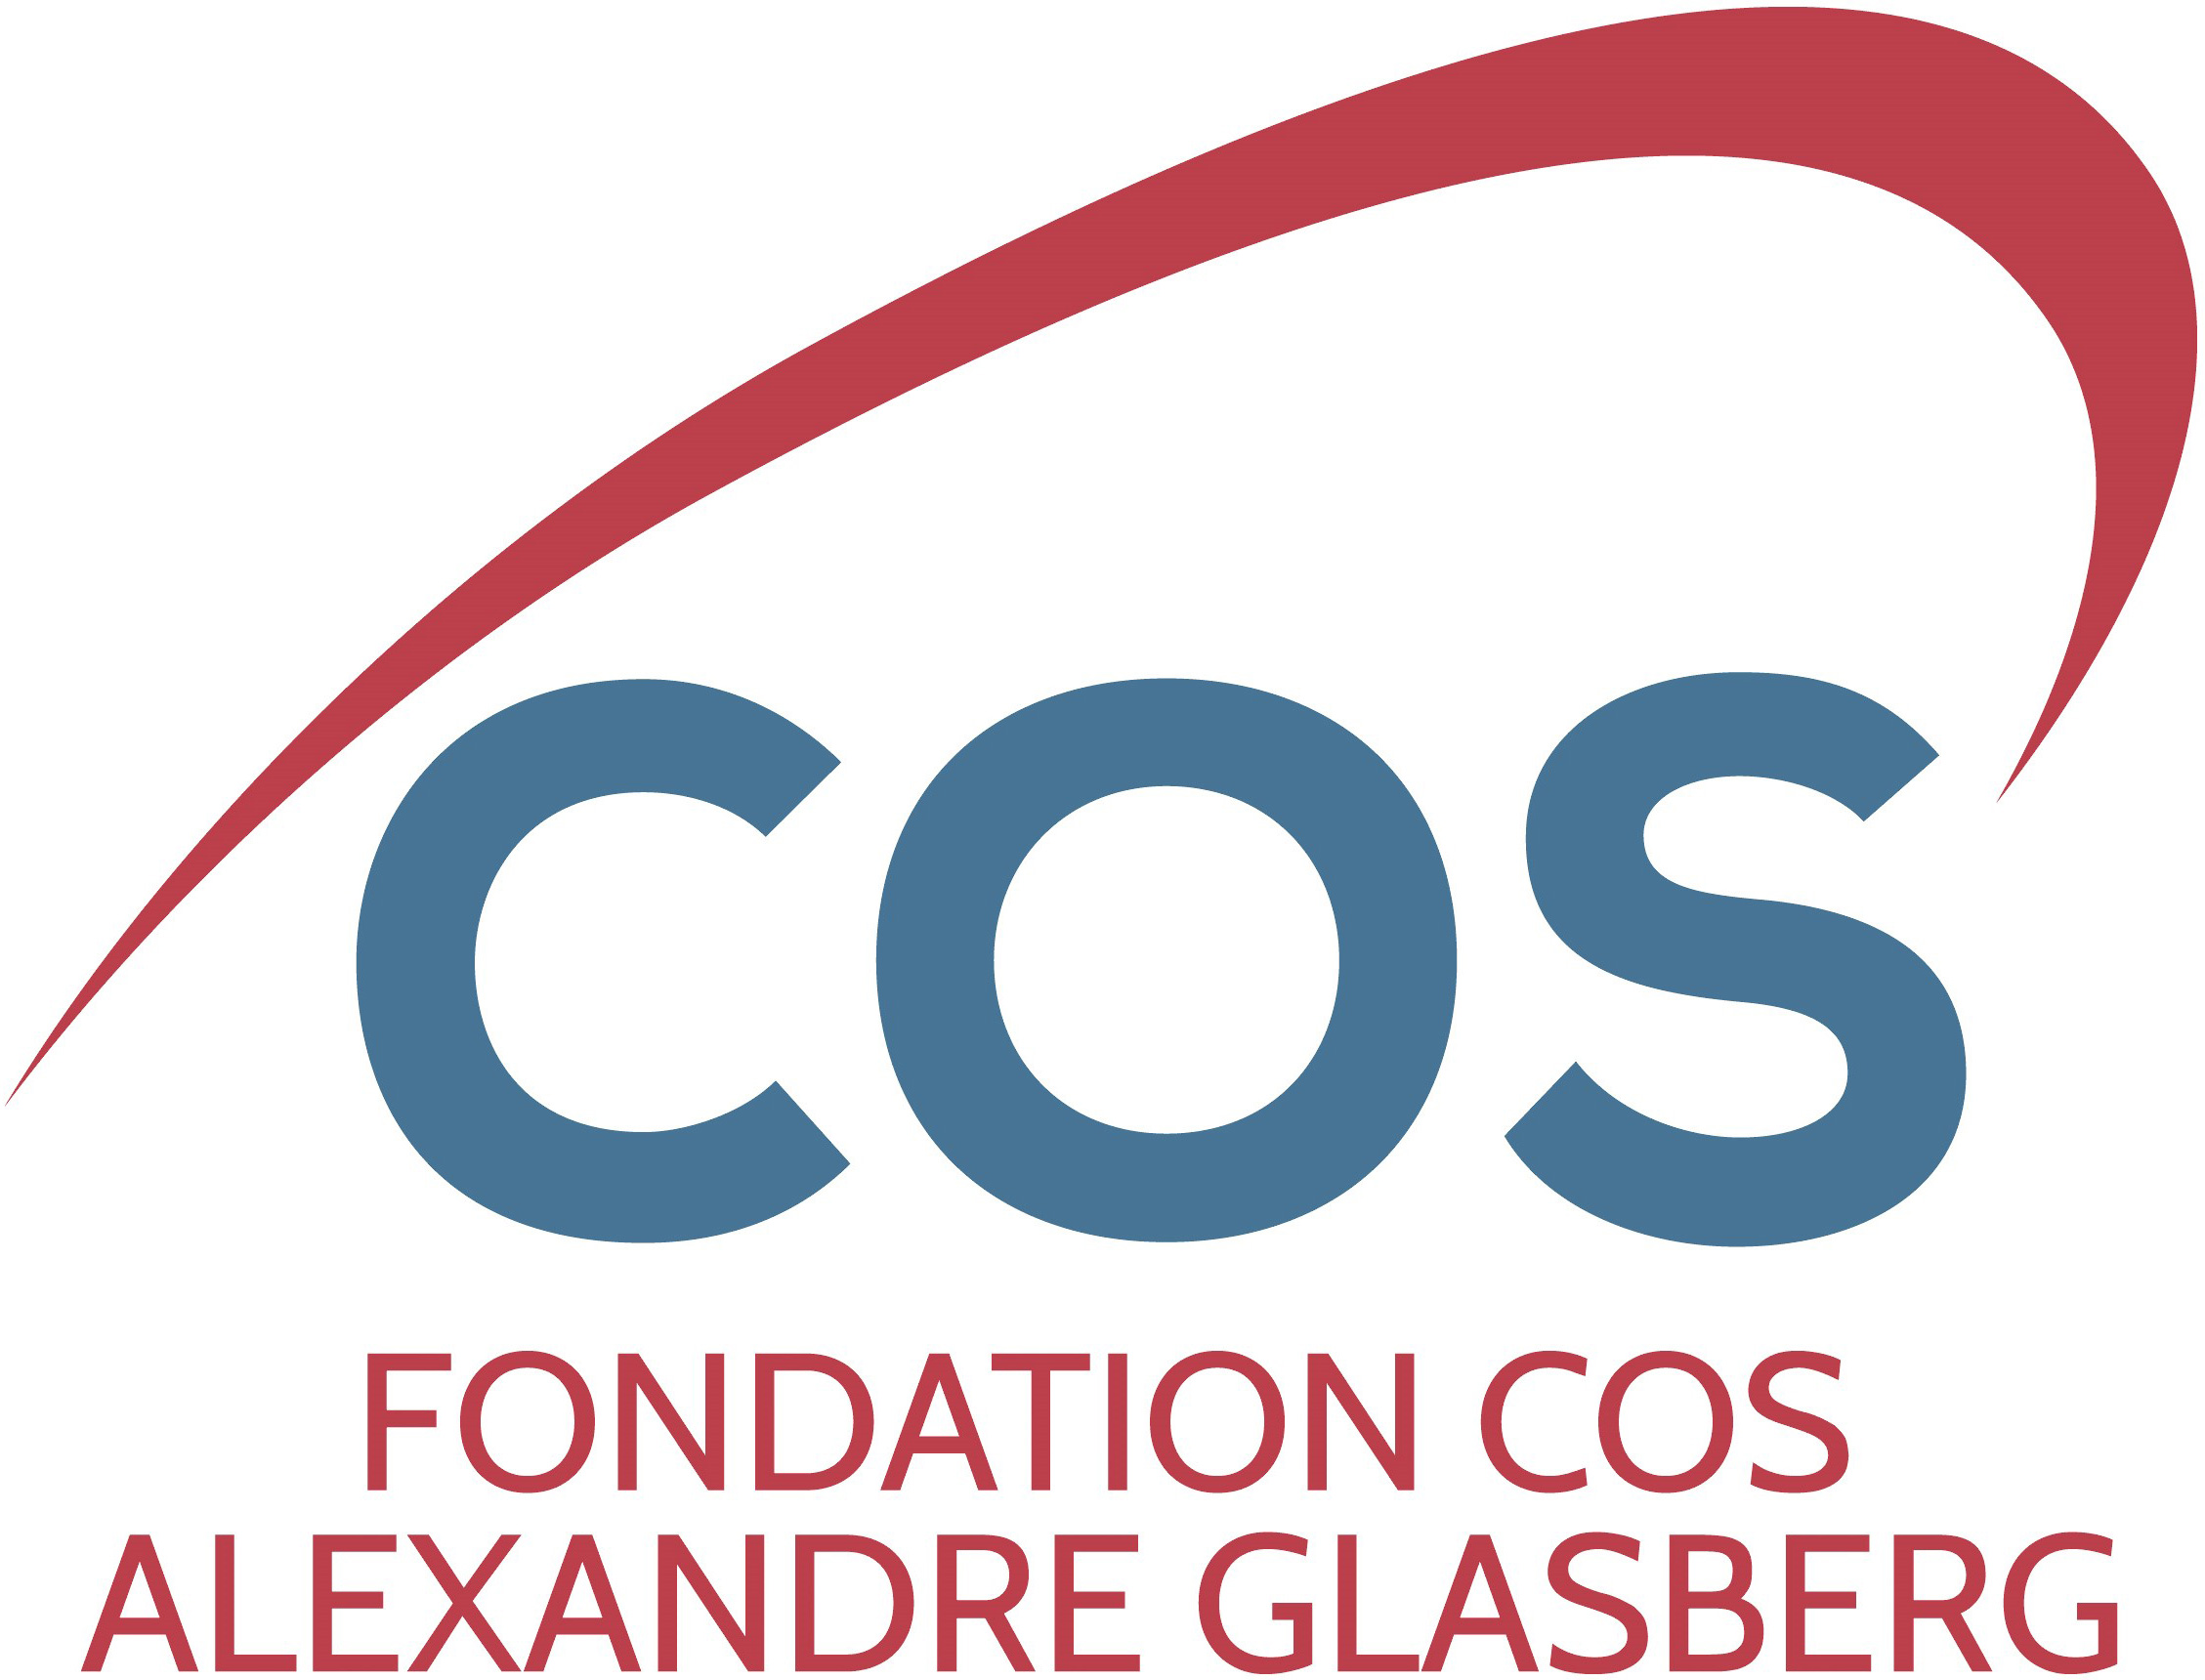 Fondation COS Alexandre GLASBEREG